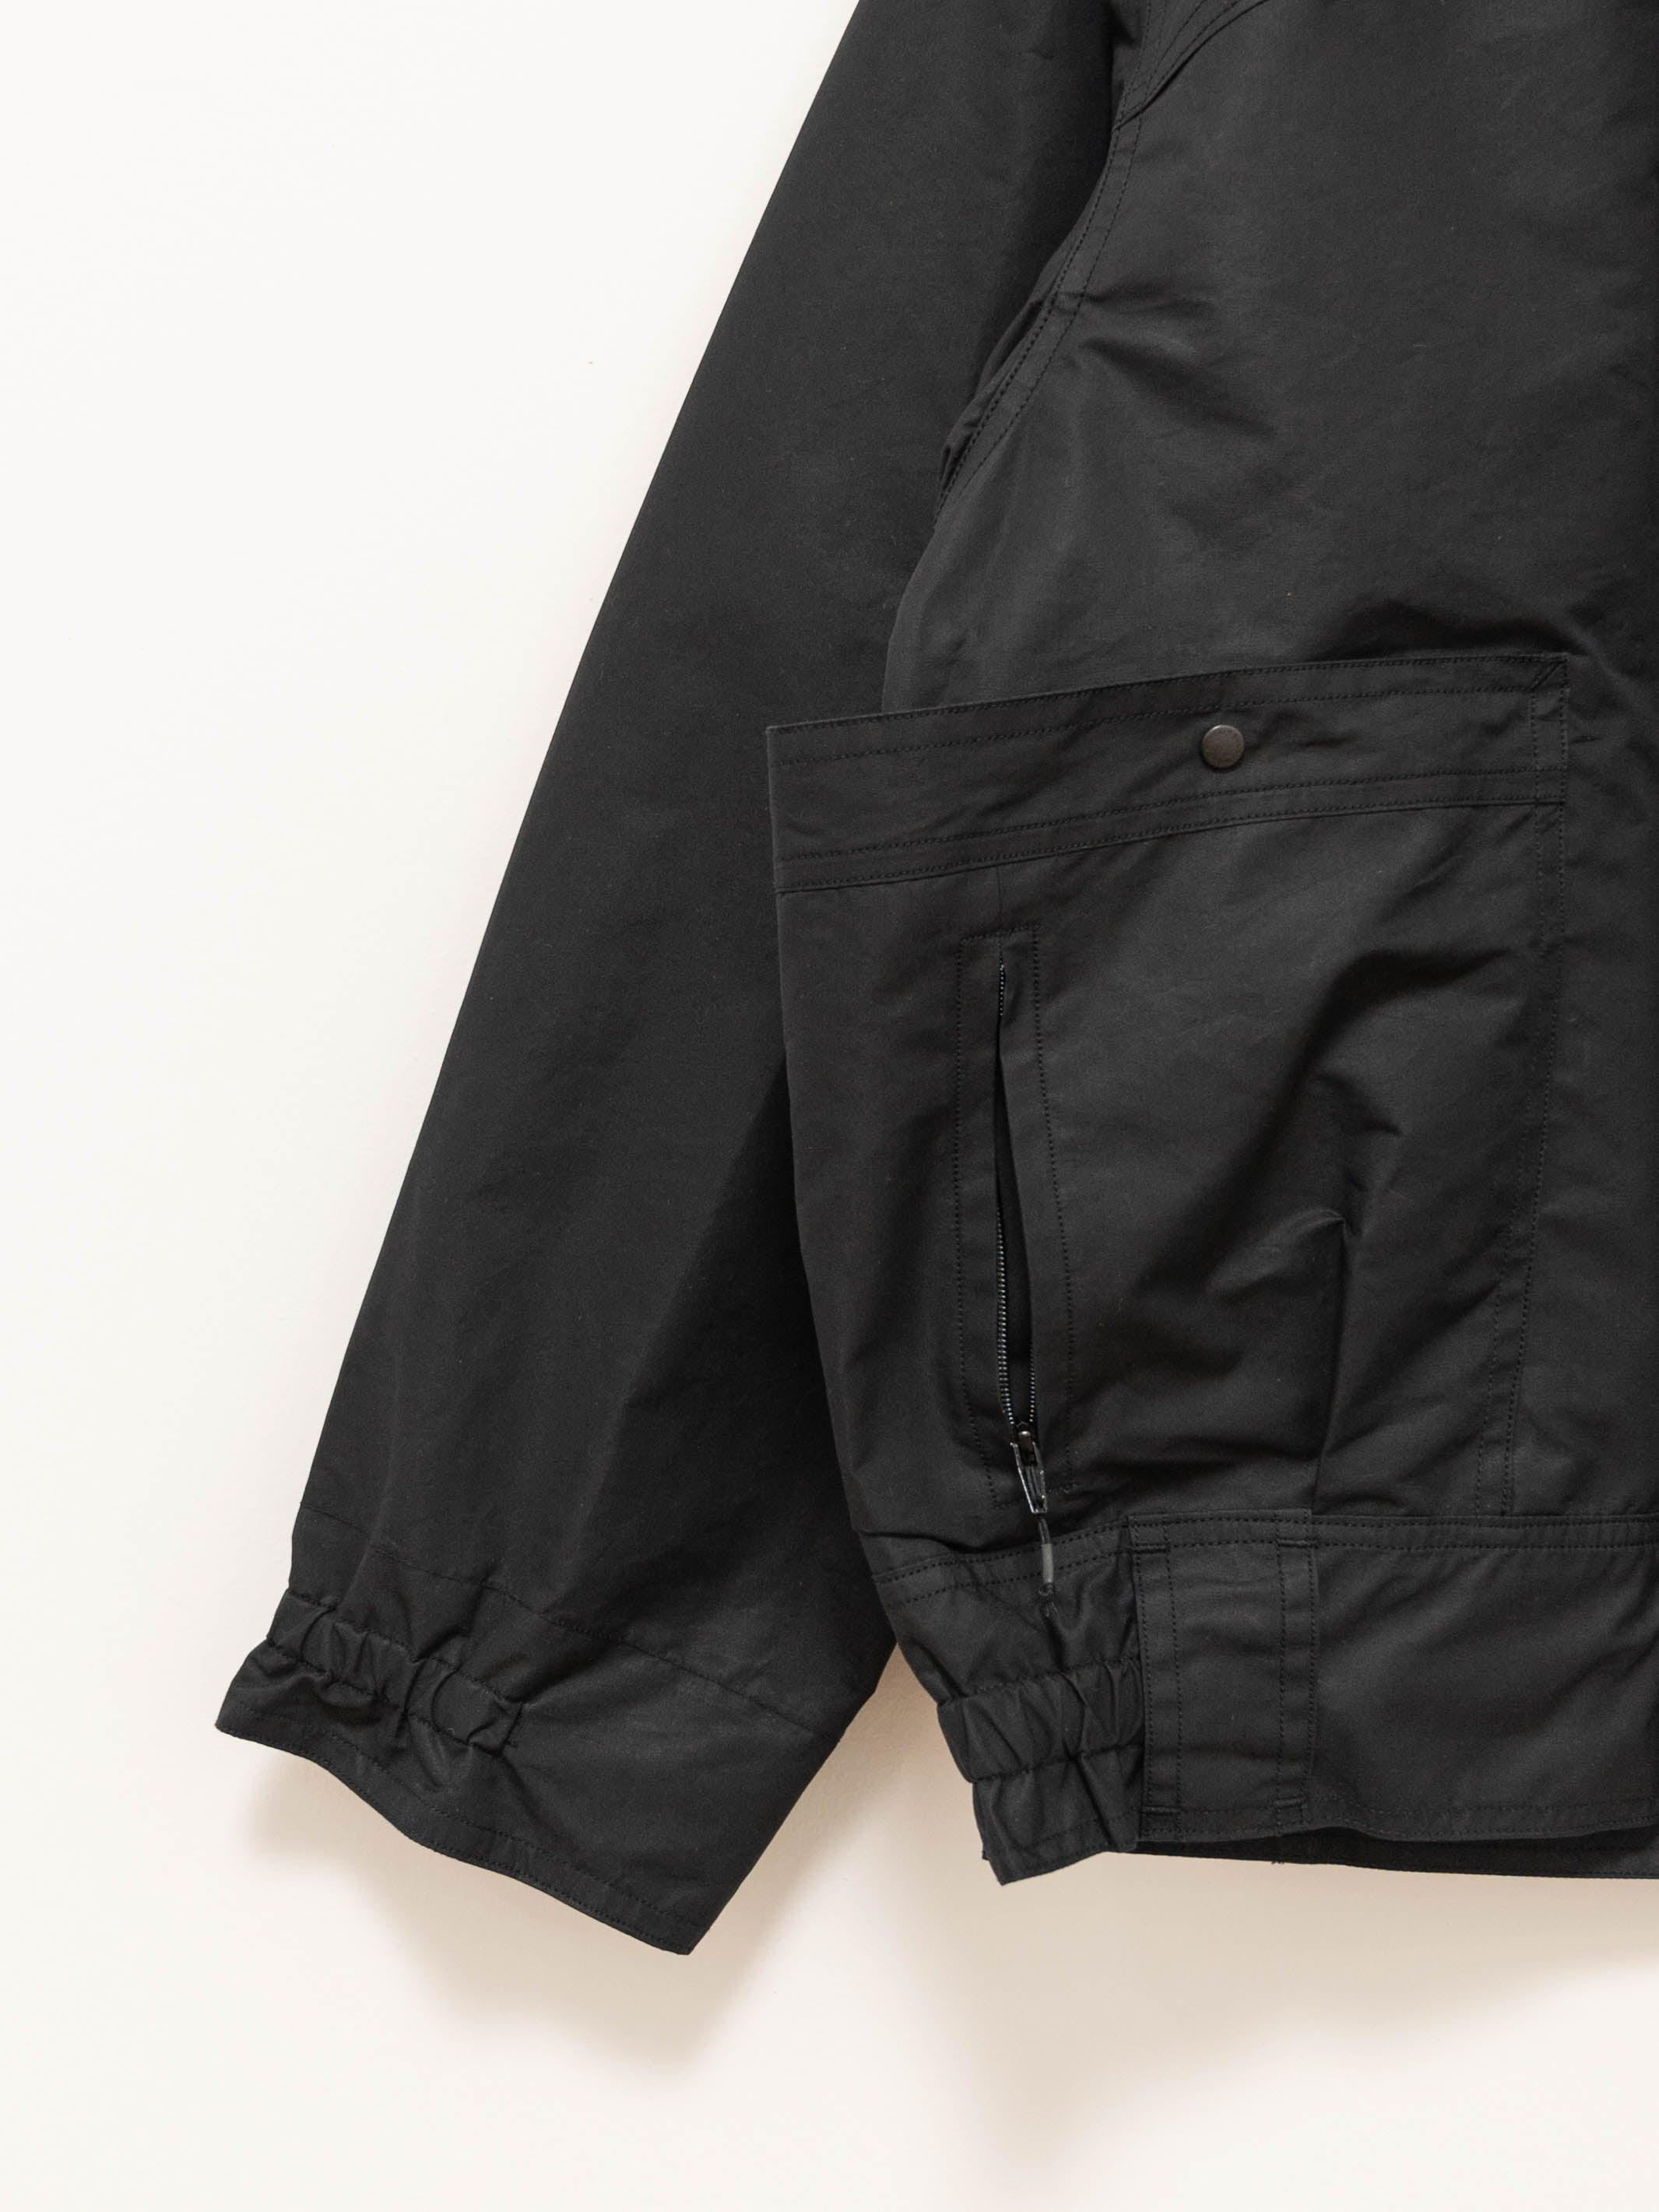 Namu Shop - Kaptain Sunshine C/P Water Repellent Portage Jacket - Black